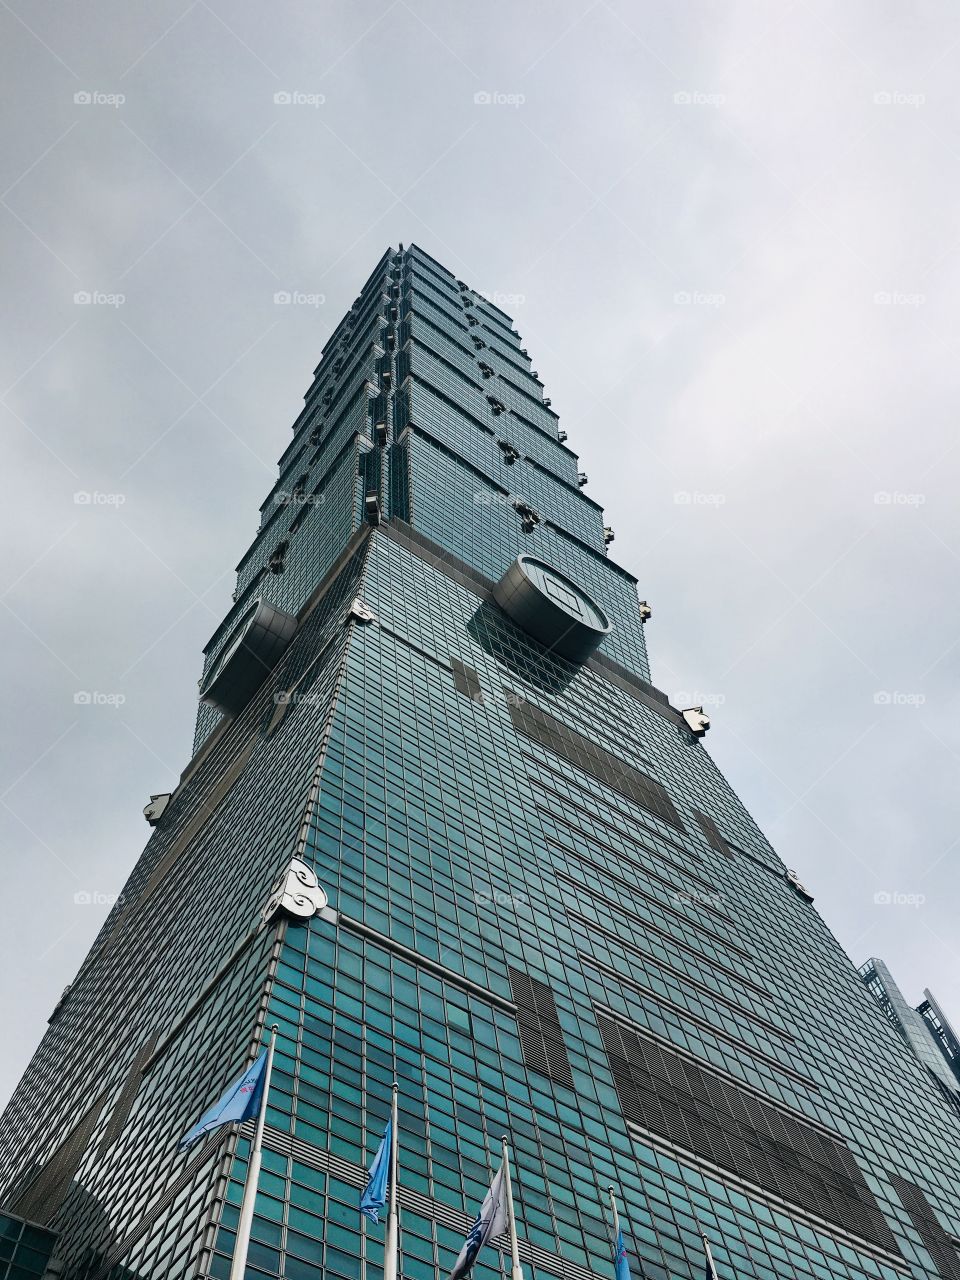 Taipei 101 skyscraper architecture tall building in Taiwan 